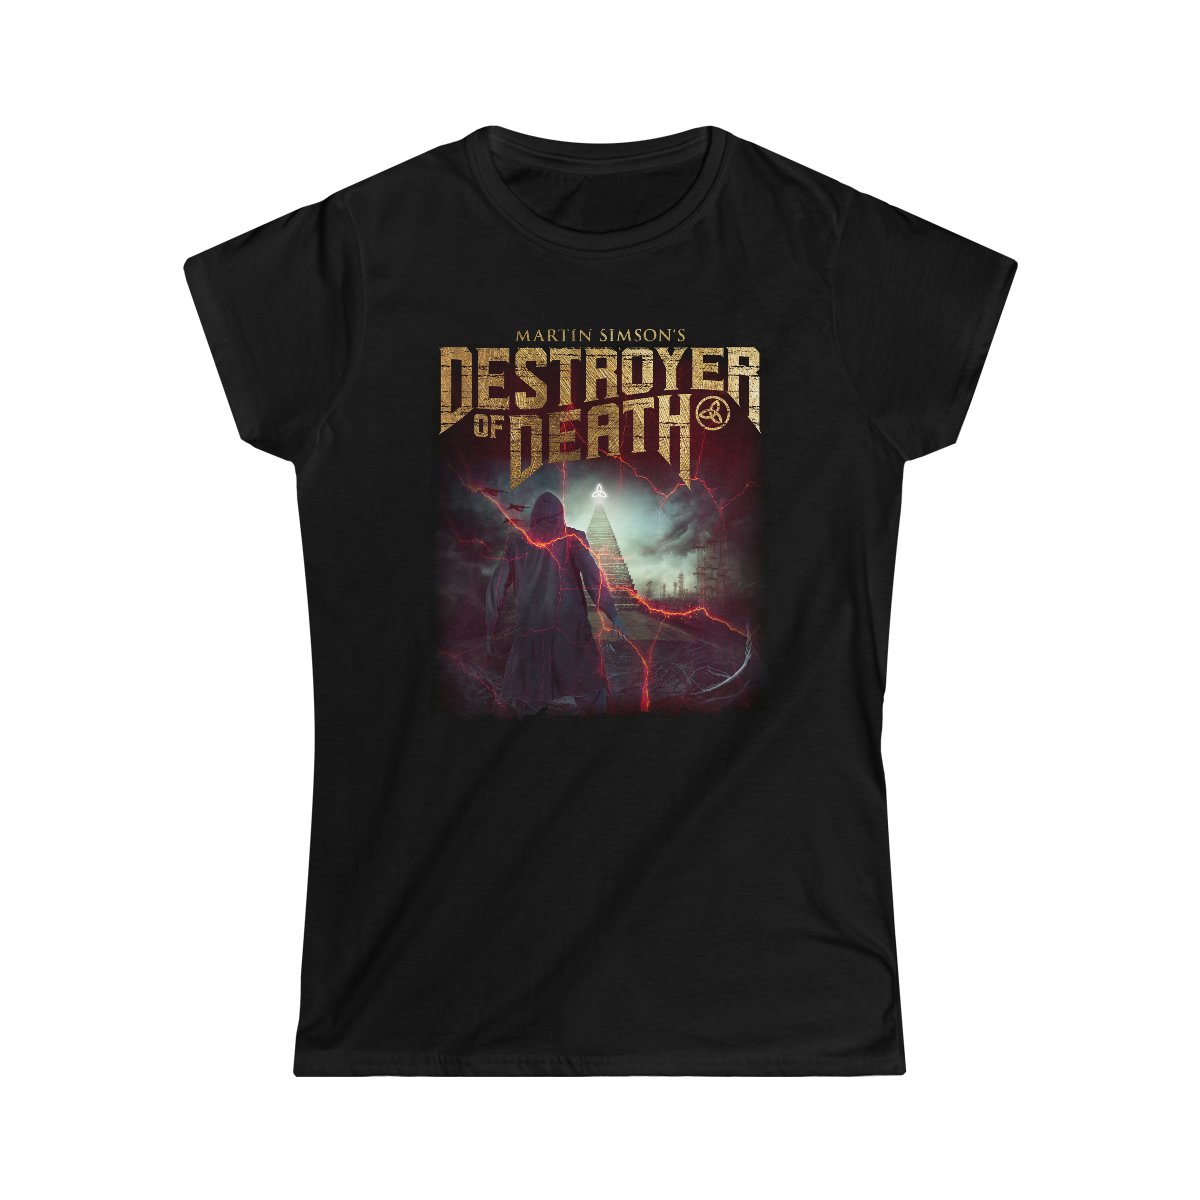 Martin Simson’s Destroyer of Death – Master of All (Version 2) Women’s Short Sleeve Tshirt 64000LD